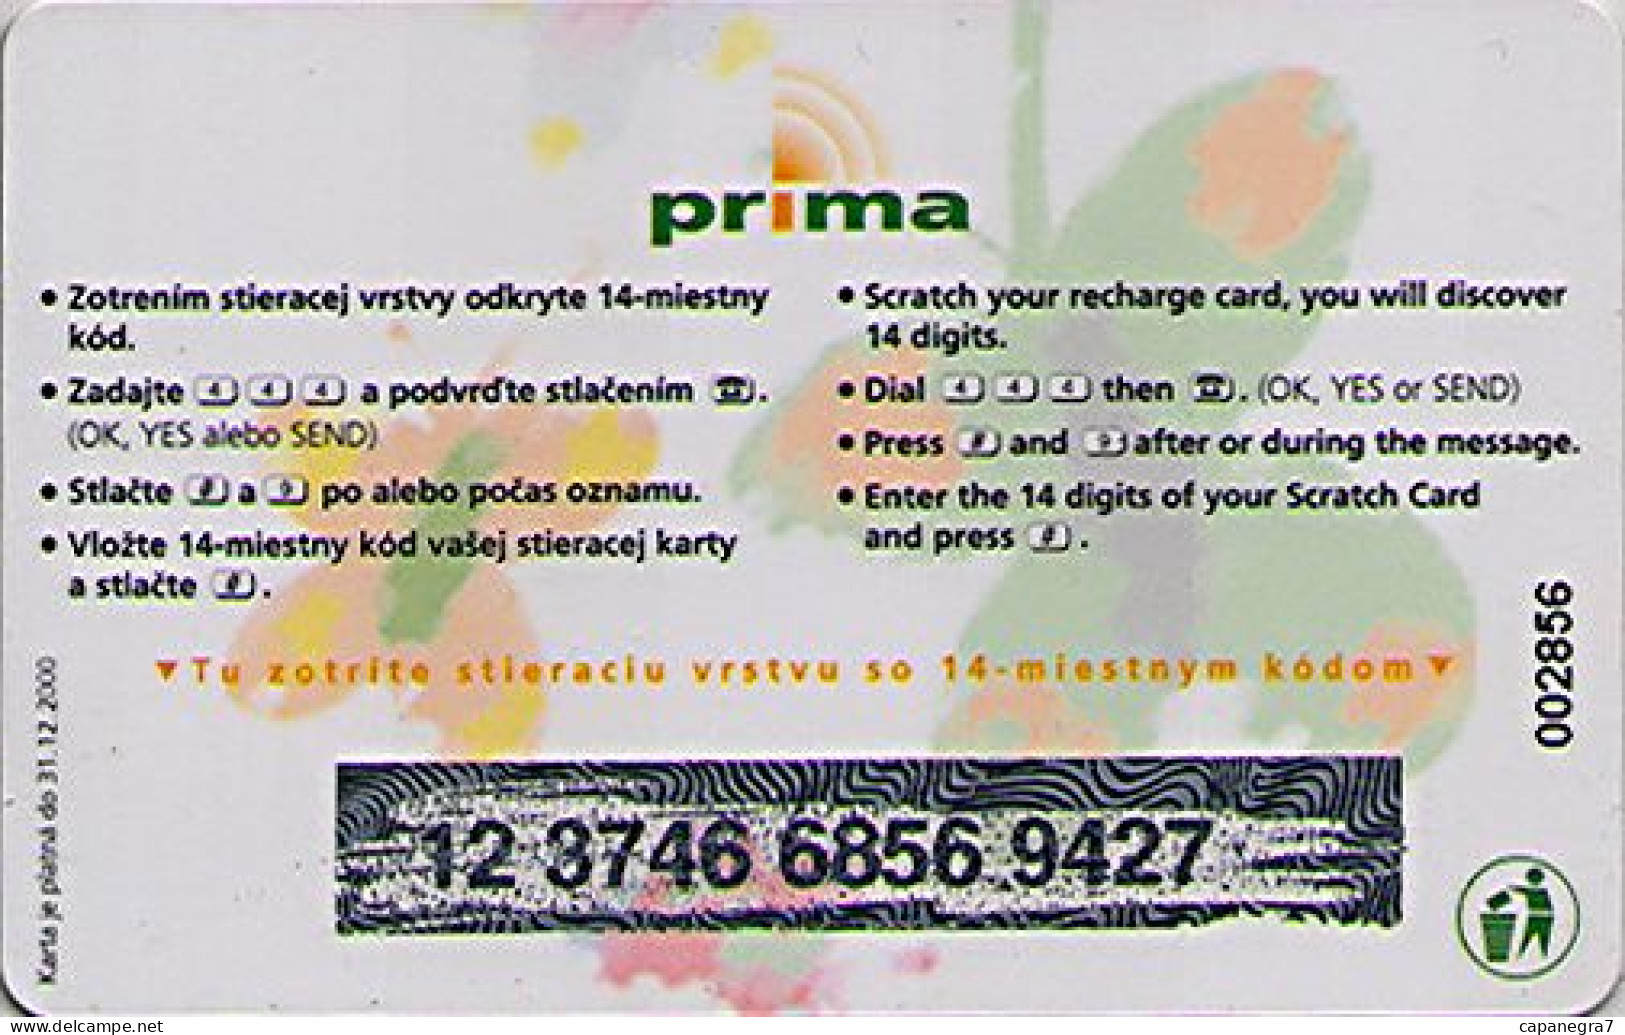 Nokia 6110 Phone, Globtel GSM Slovakia, Validity 31.12.2000, Card Numbers From  From Bottom To Top, Slovakia - Slovacchia